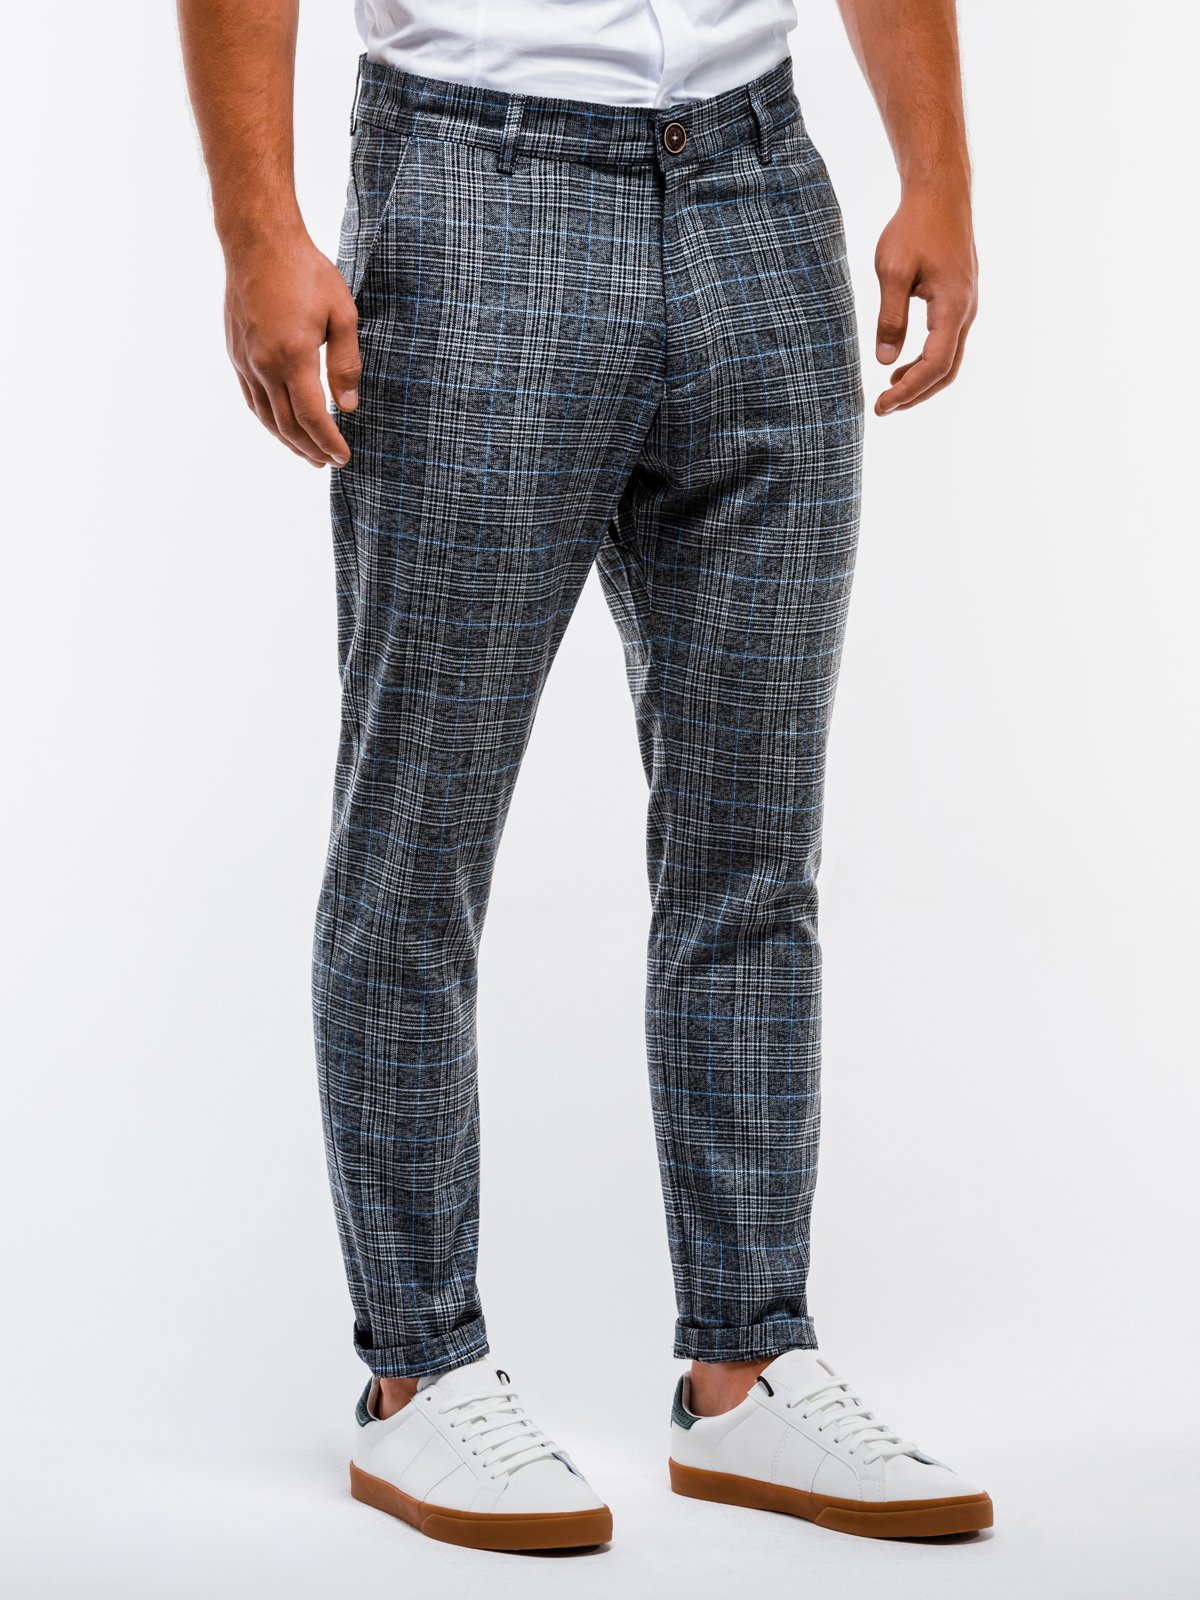 Men's pants chinos P848 - black | MODONE wholesale - Clothing For Men